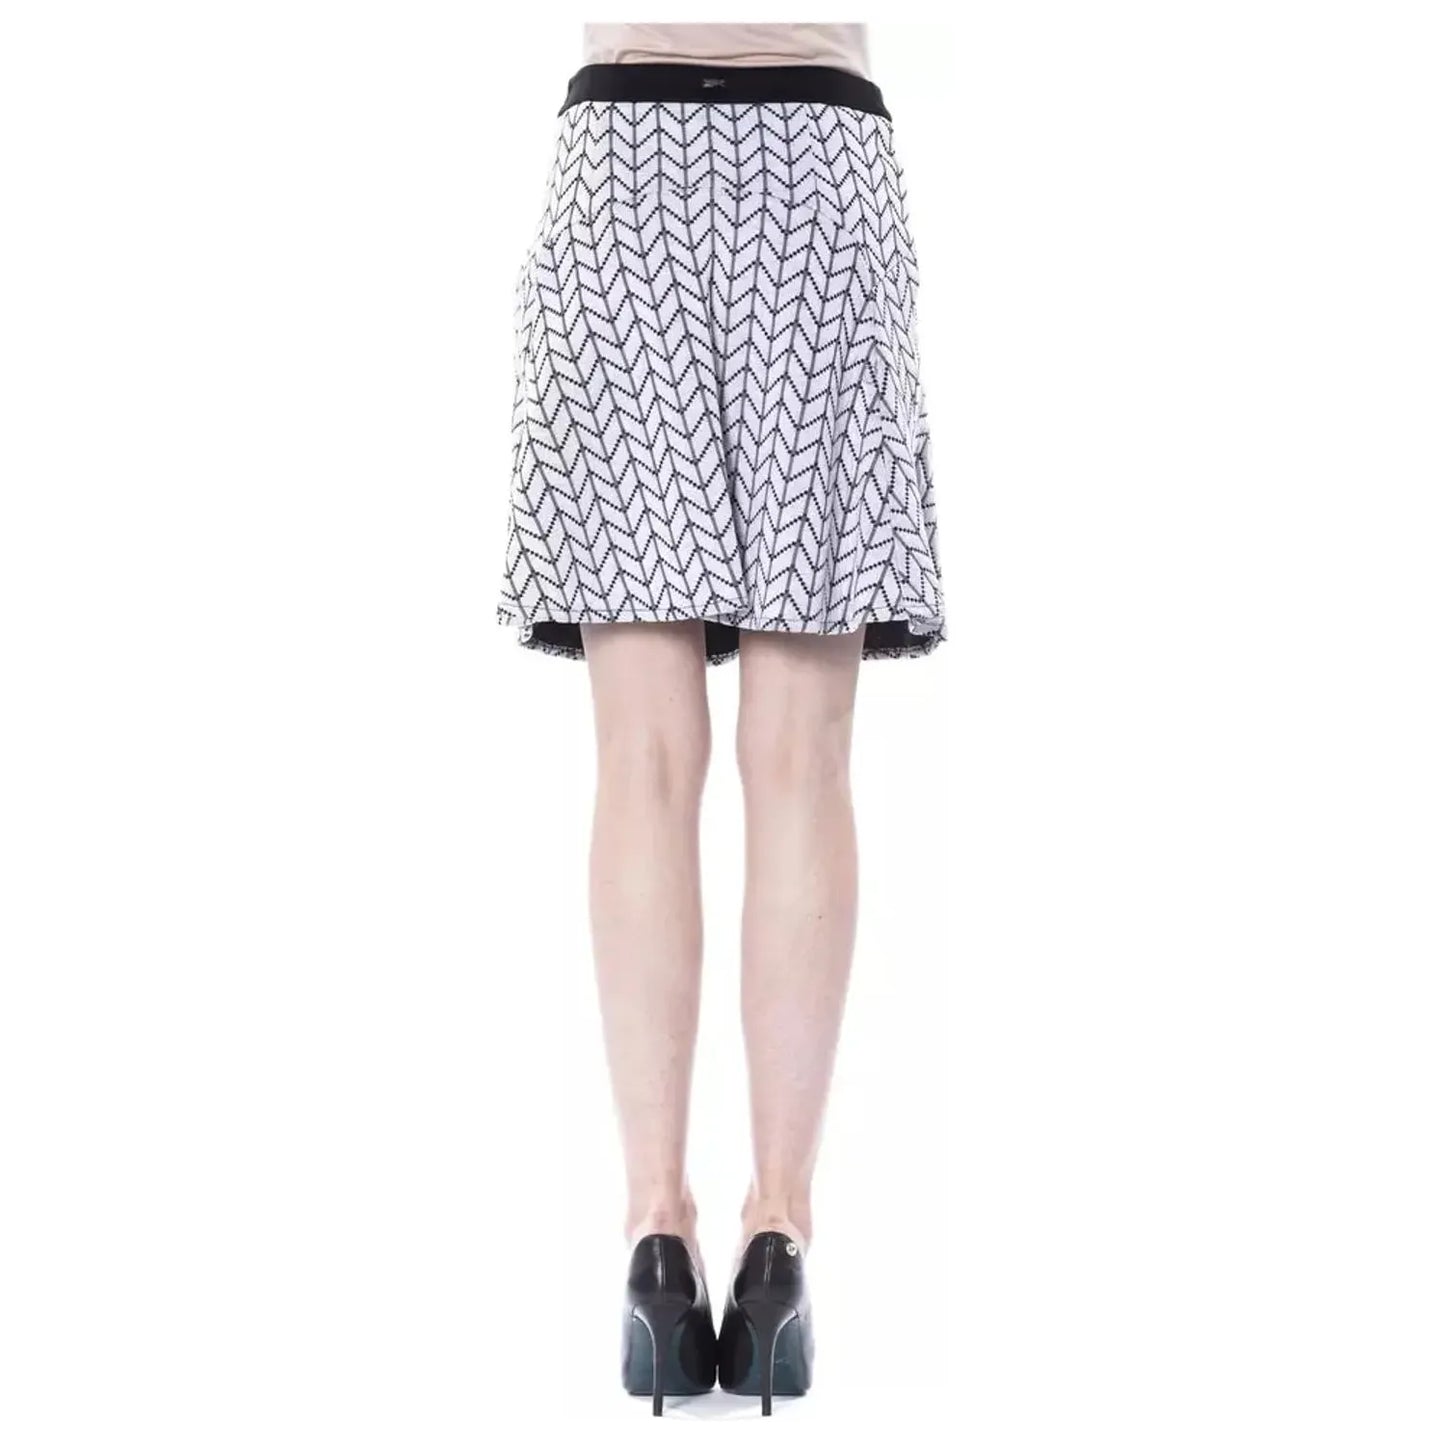 BYBLOS Chic Black and White Tube Short Skirt black-white-acrylic-skirt WOMAN SKIRTS stock_product_image_13818_1172014619-19-c8f99253-aee.webp